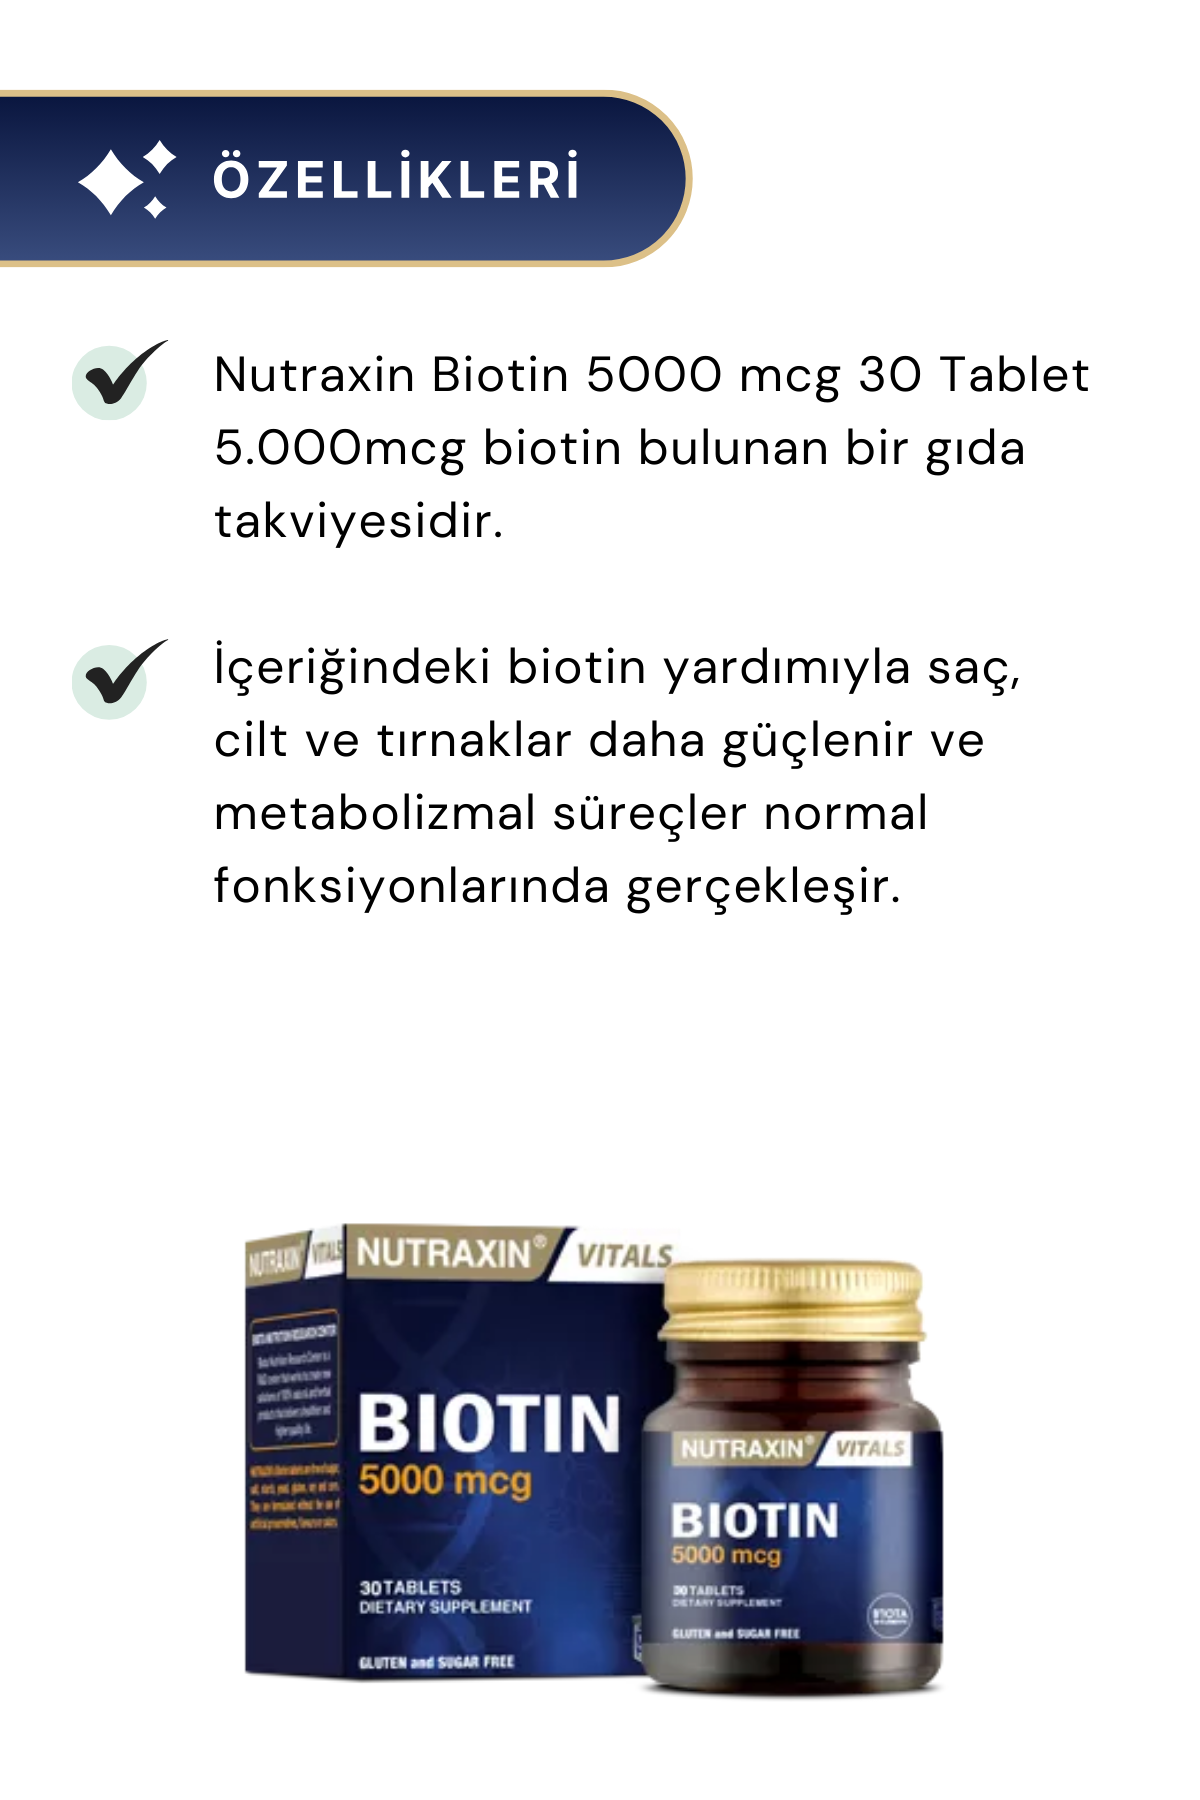 Nutraxin Biotin 5000 Mcg 30 Tablet 2'li Paket